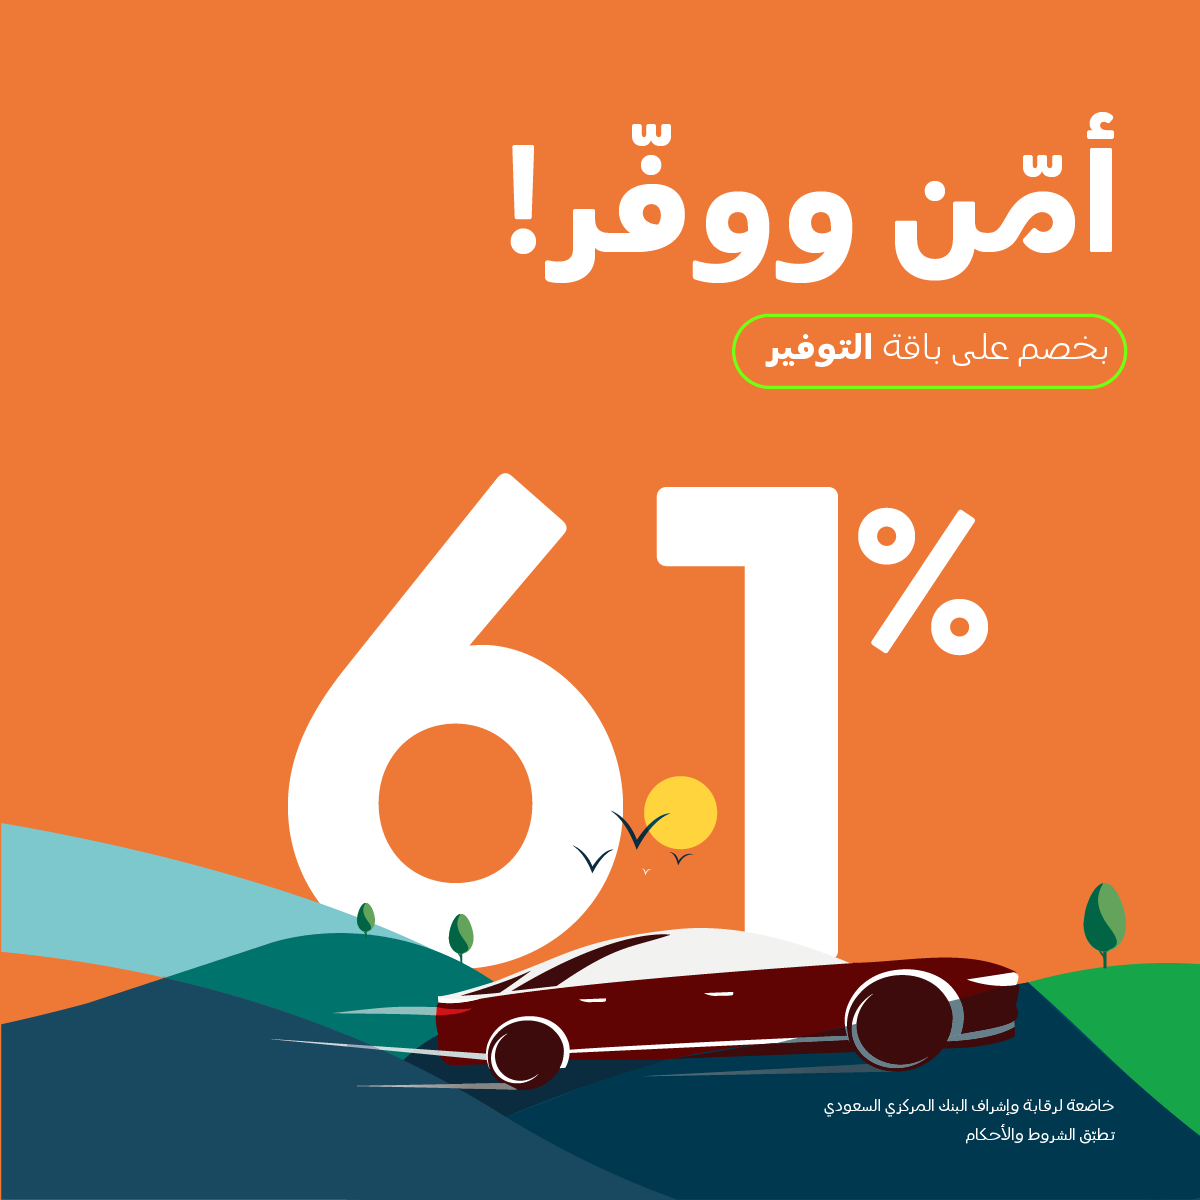 F5 sJD4WIAAoAhP - عروض اليوم الوطني ٩٣ : 🚙 امن سيارتك أكثر واحصل على خصم 61% على باقة التوفير - شركة Tree